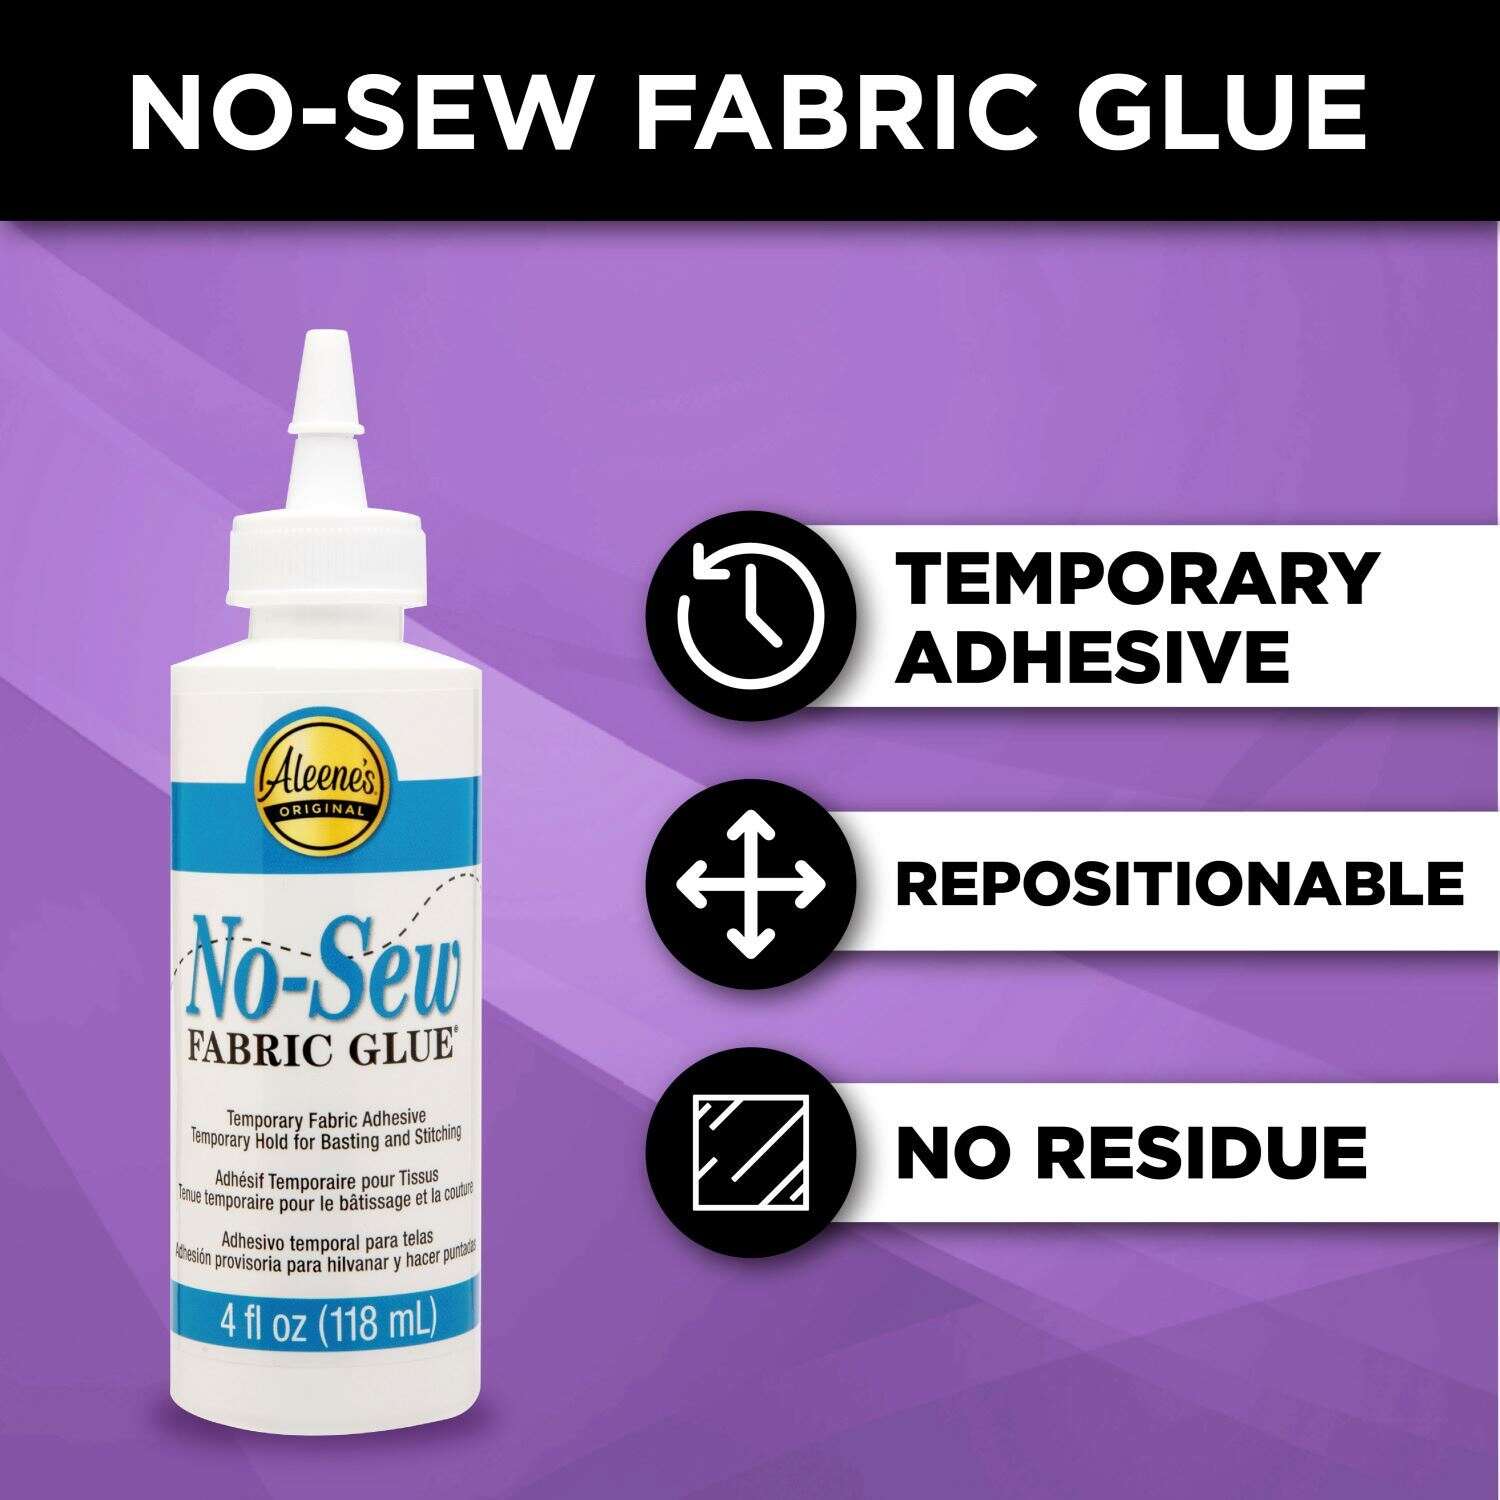 Fabric Sewing Glue